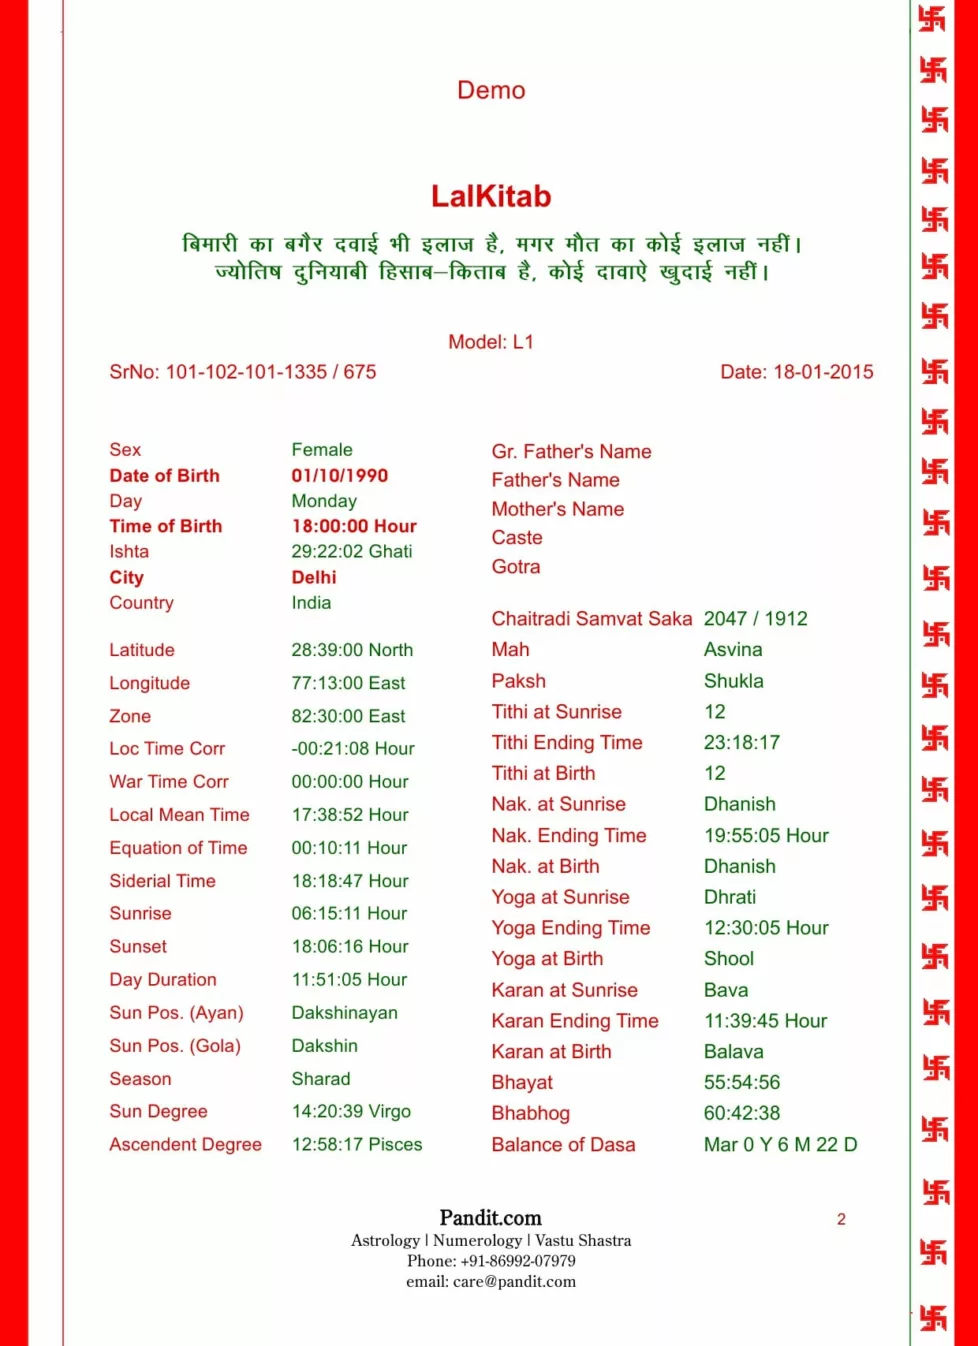 LalKitab Horoscope Sample 2